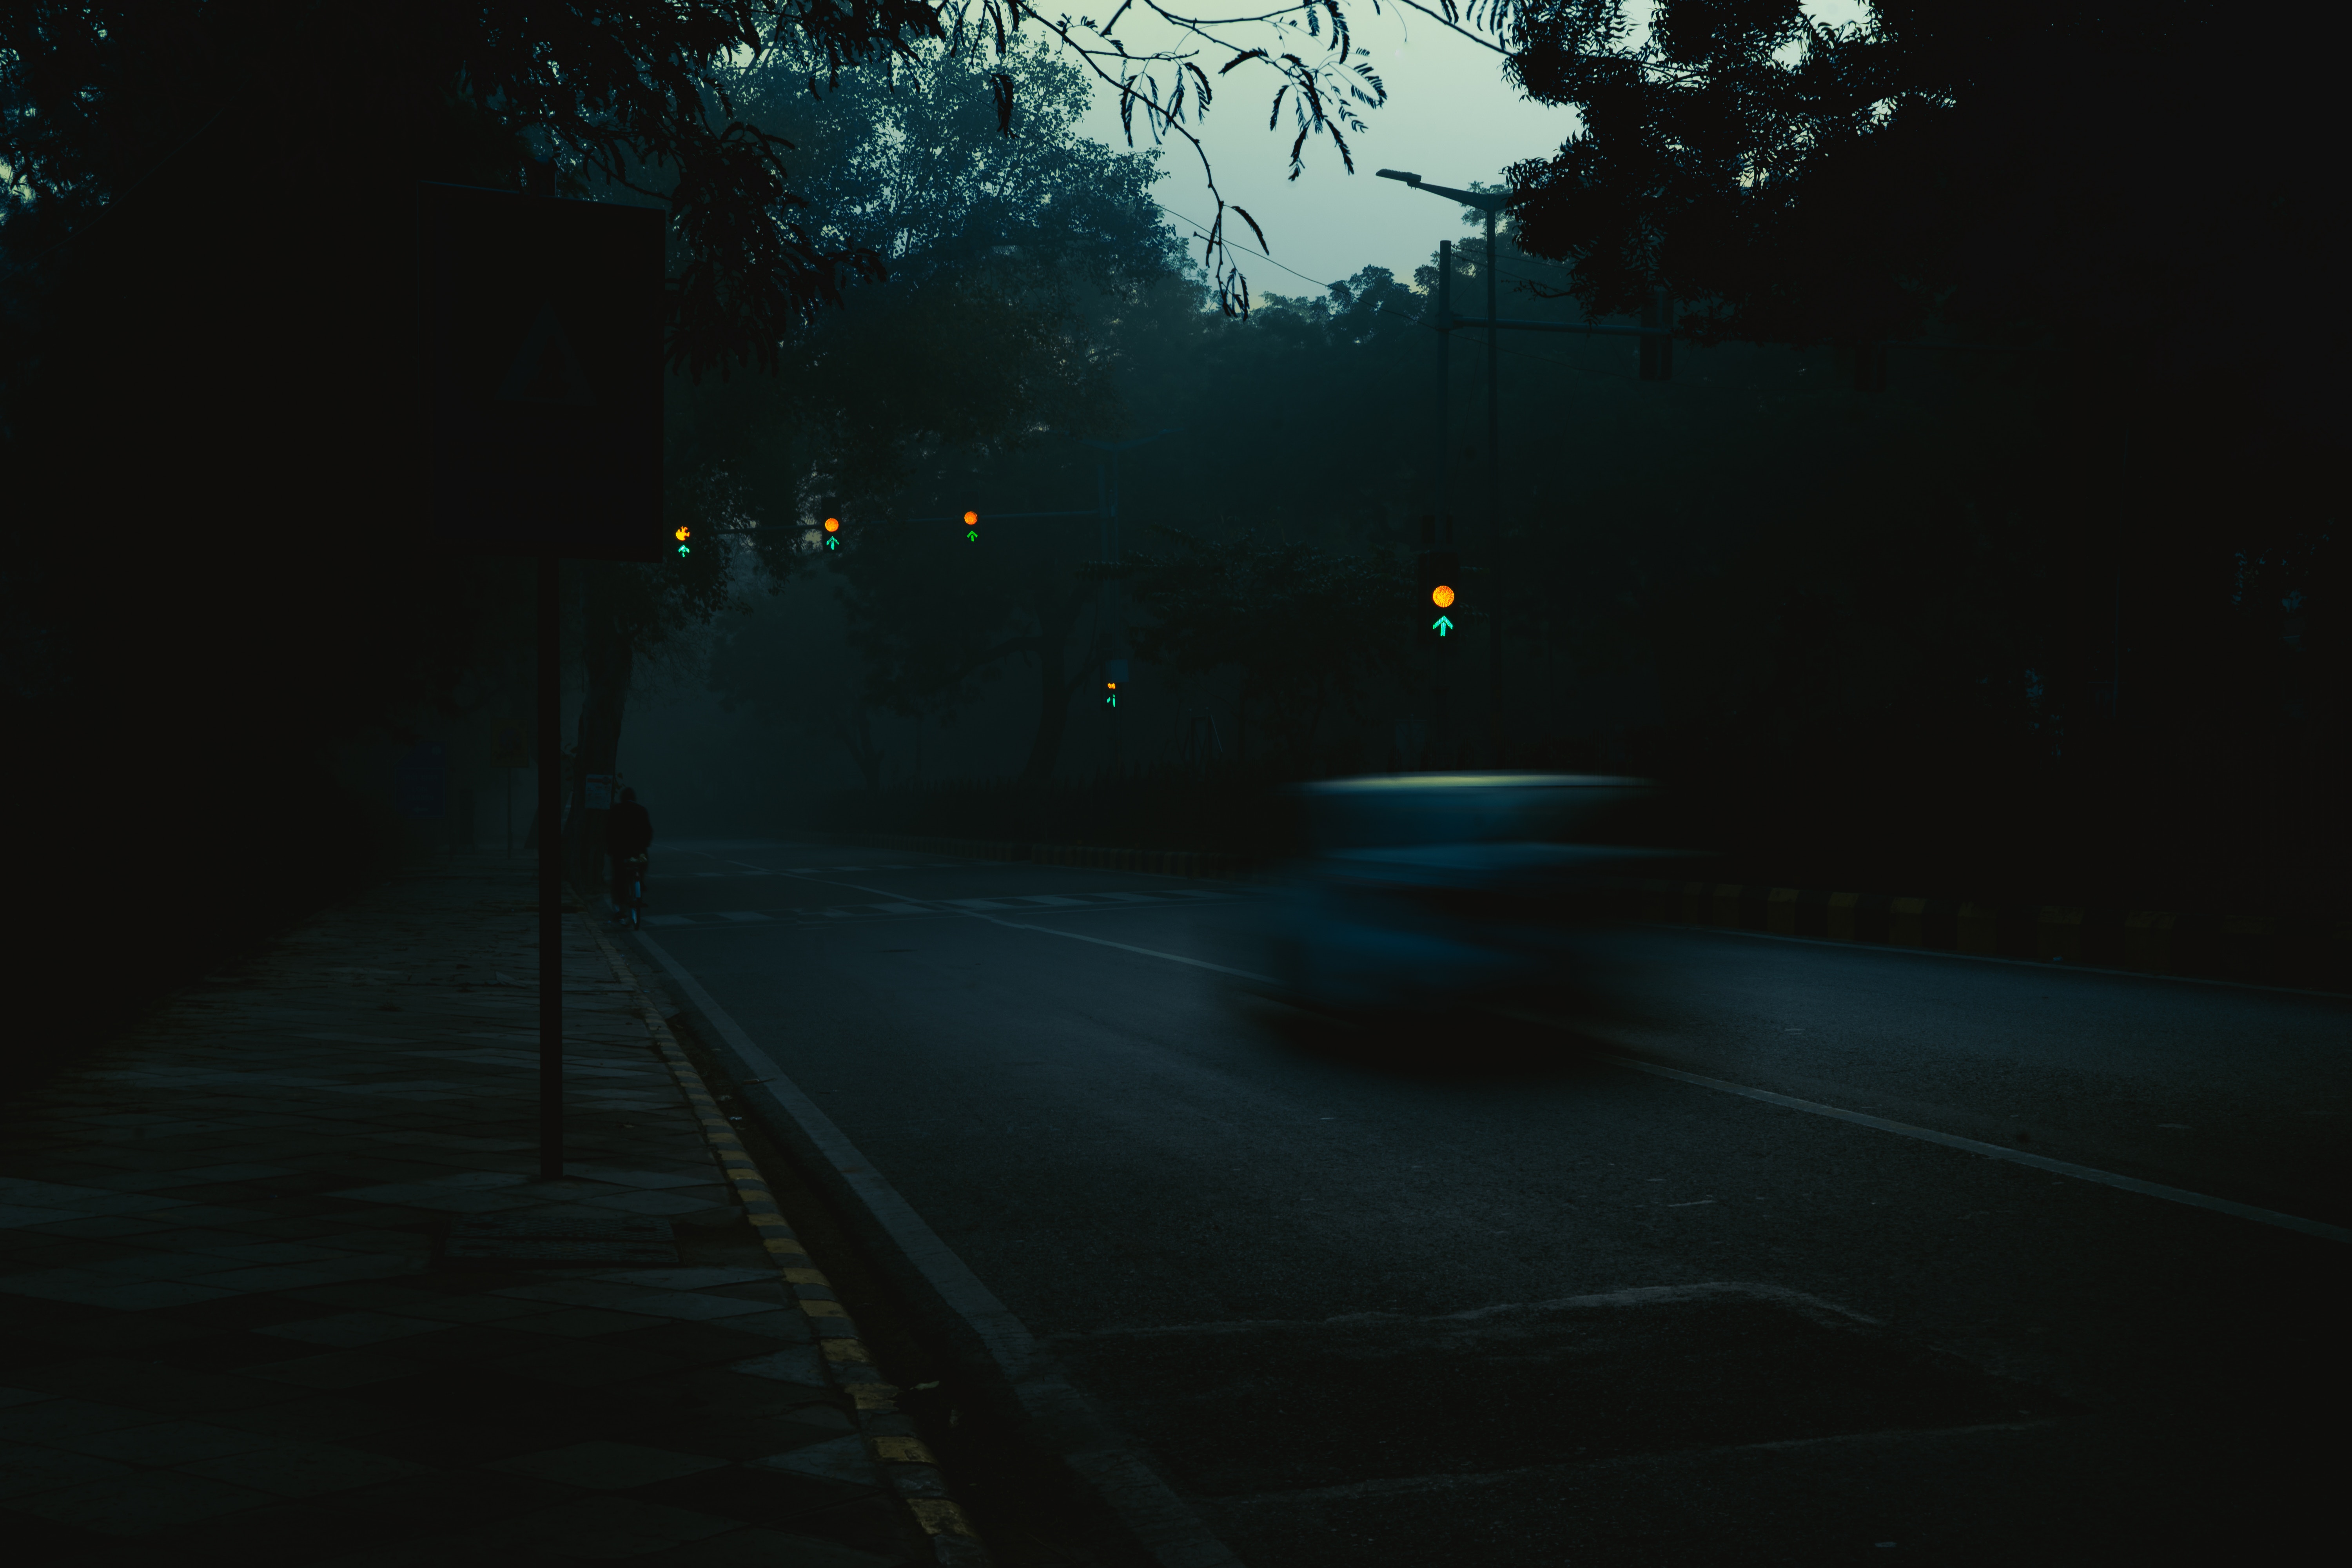 dark, gloomy, car, silhouette, traffic, movement